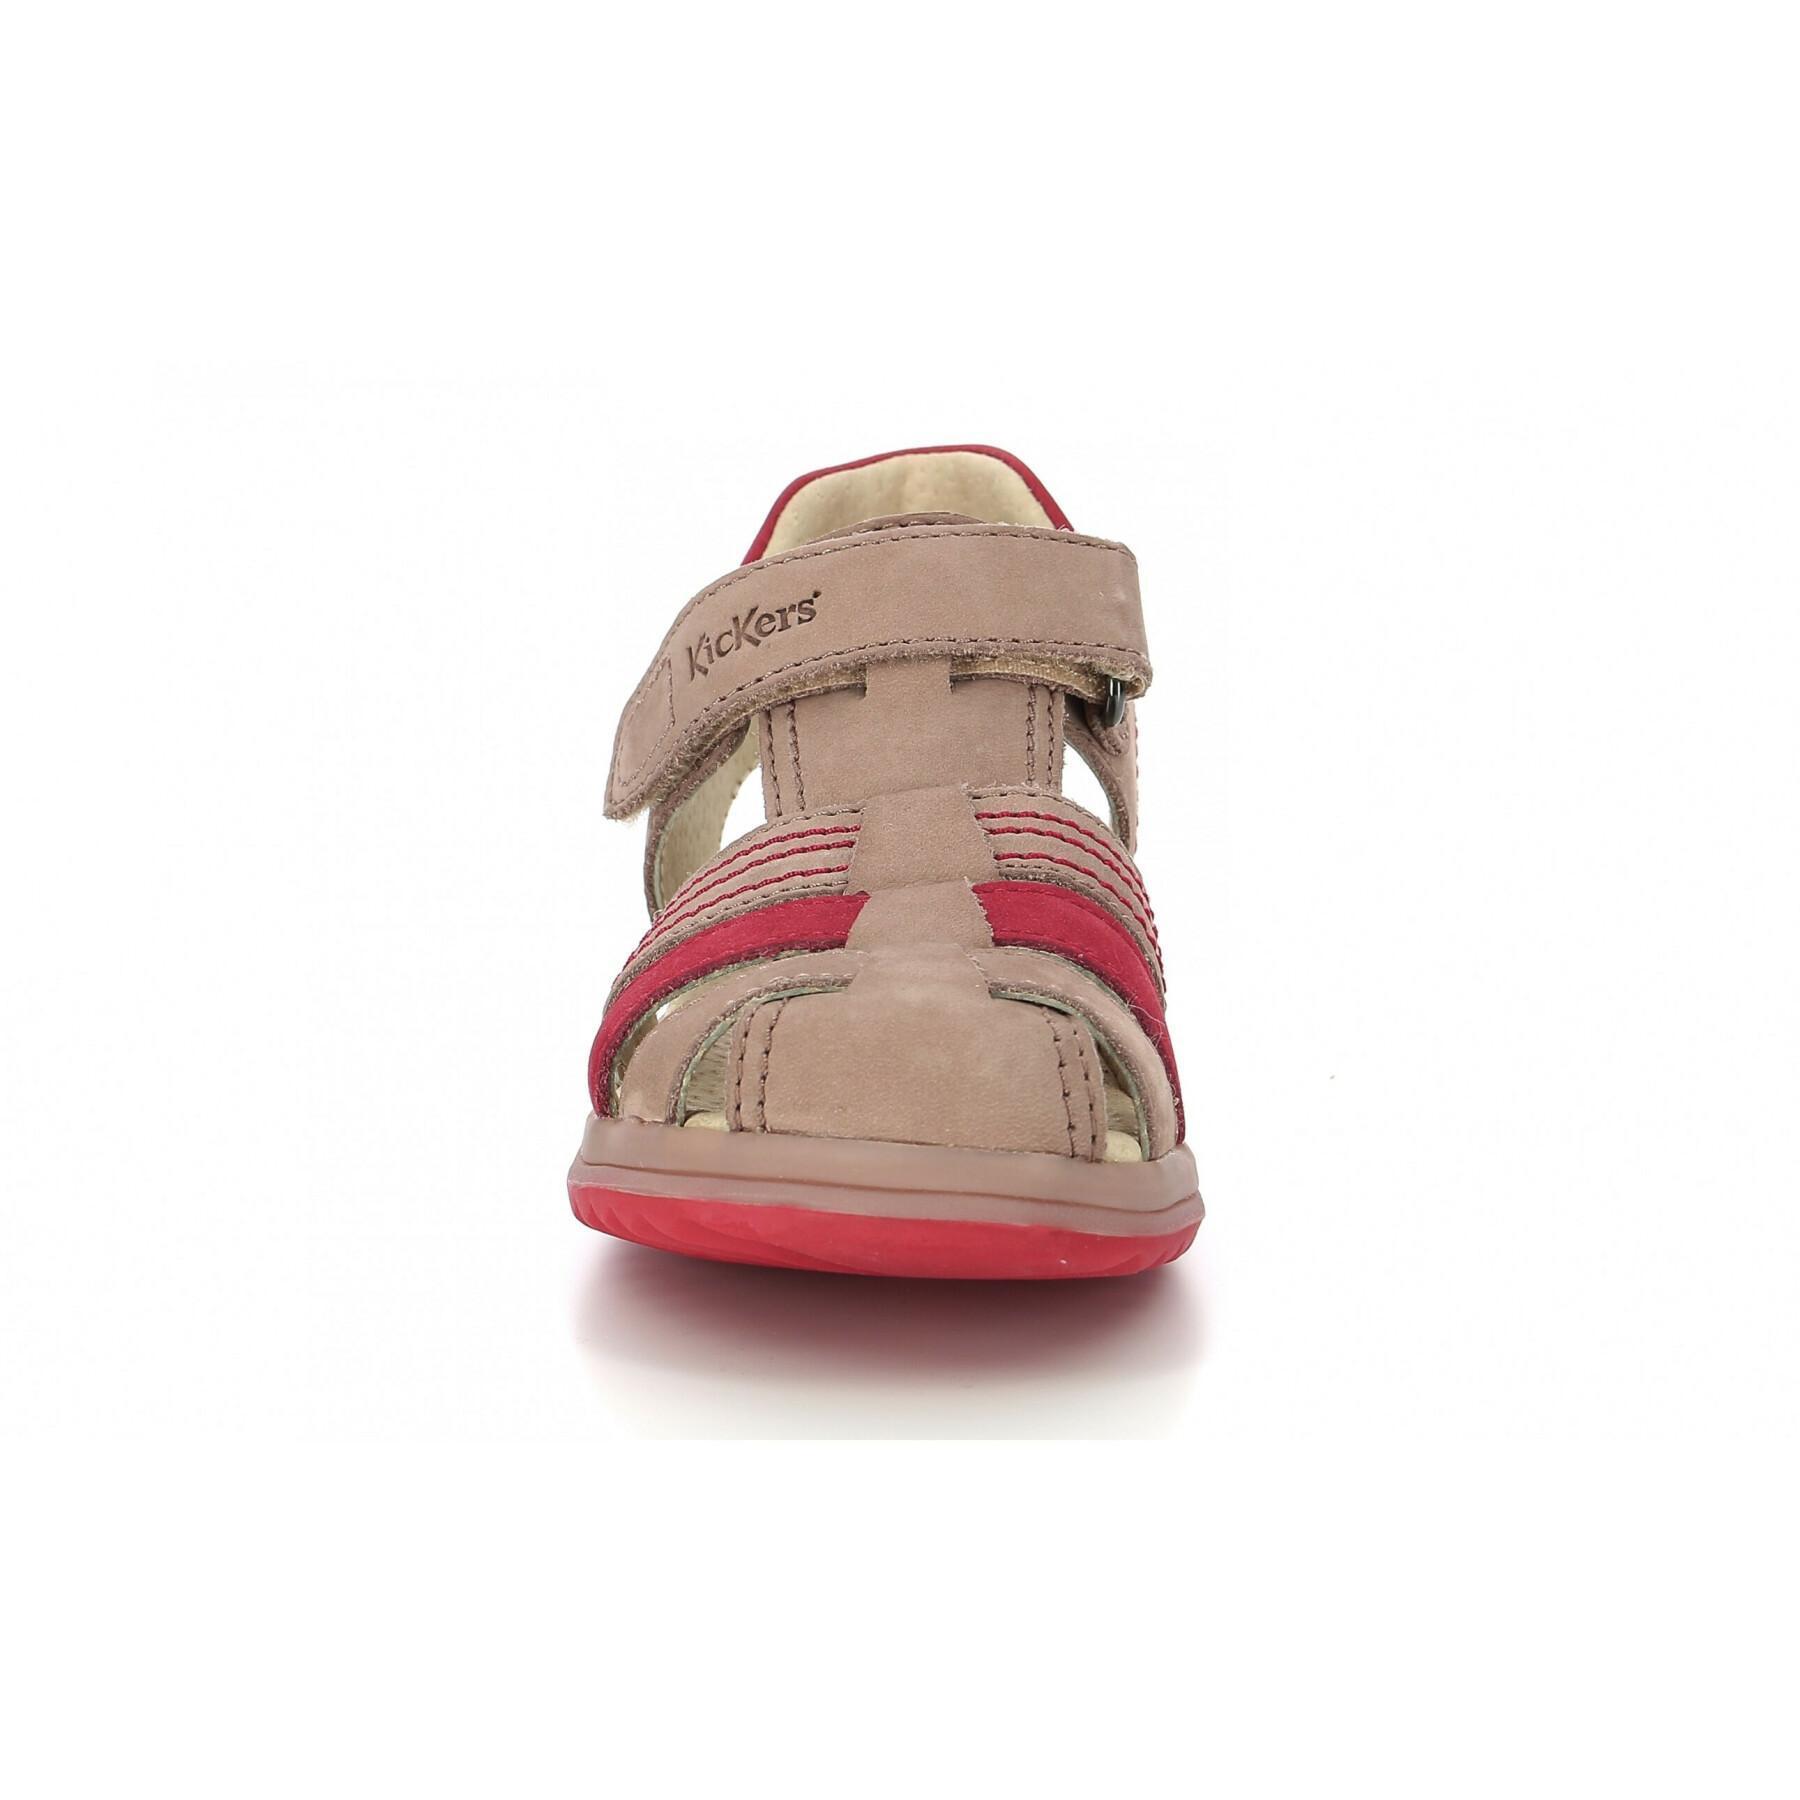 Children's sandals Kickers Platinium